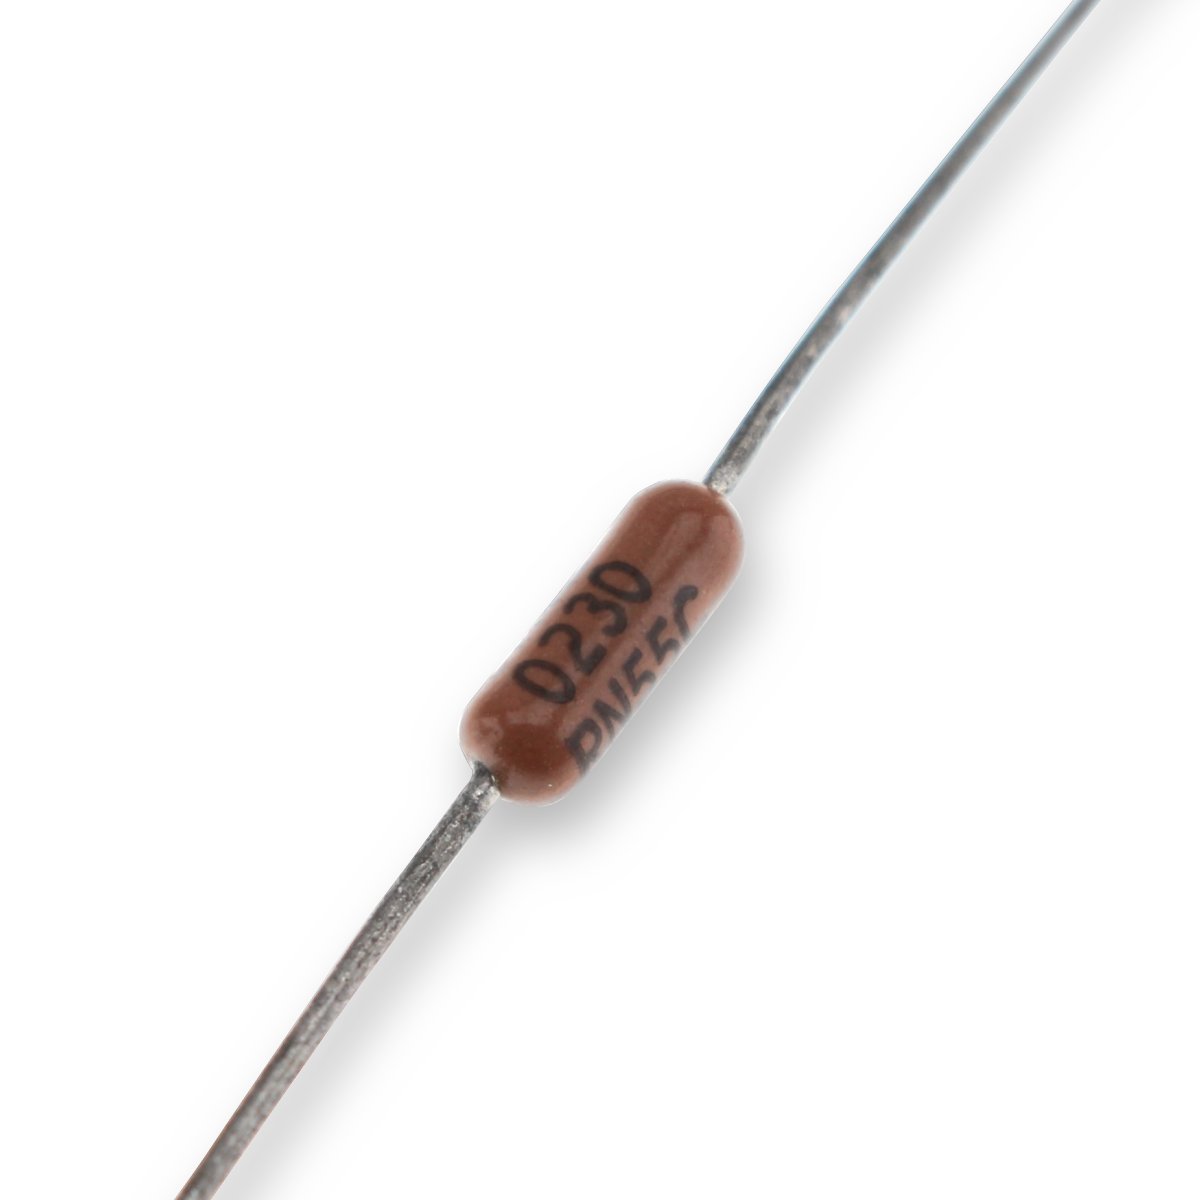 VISHAY DALE CMF55 Resistor 1% 50ppm 100 Ohm